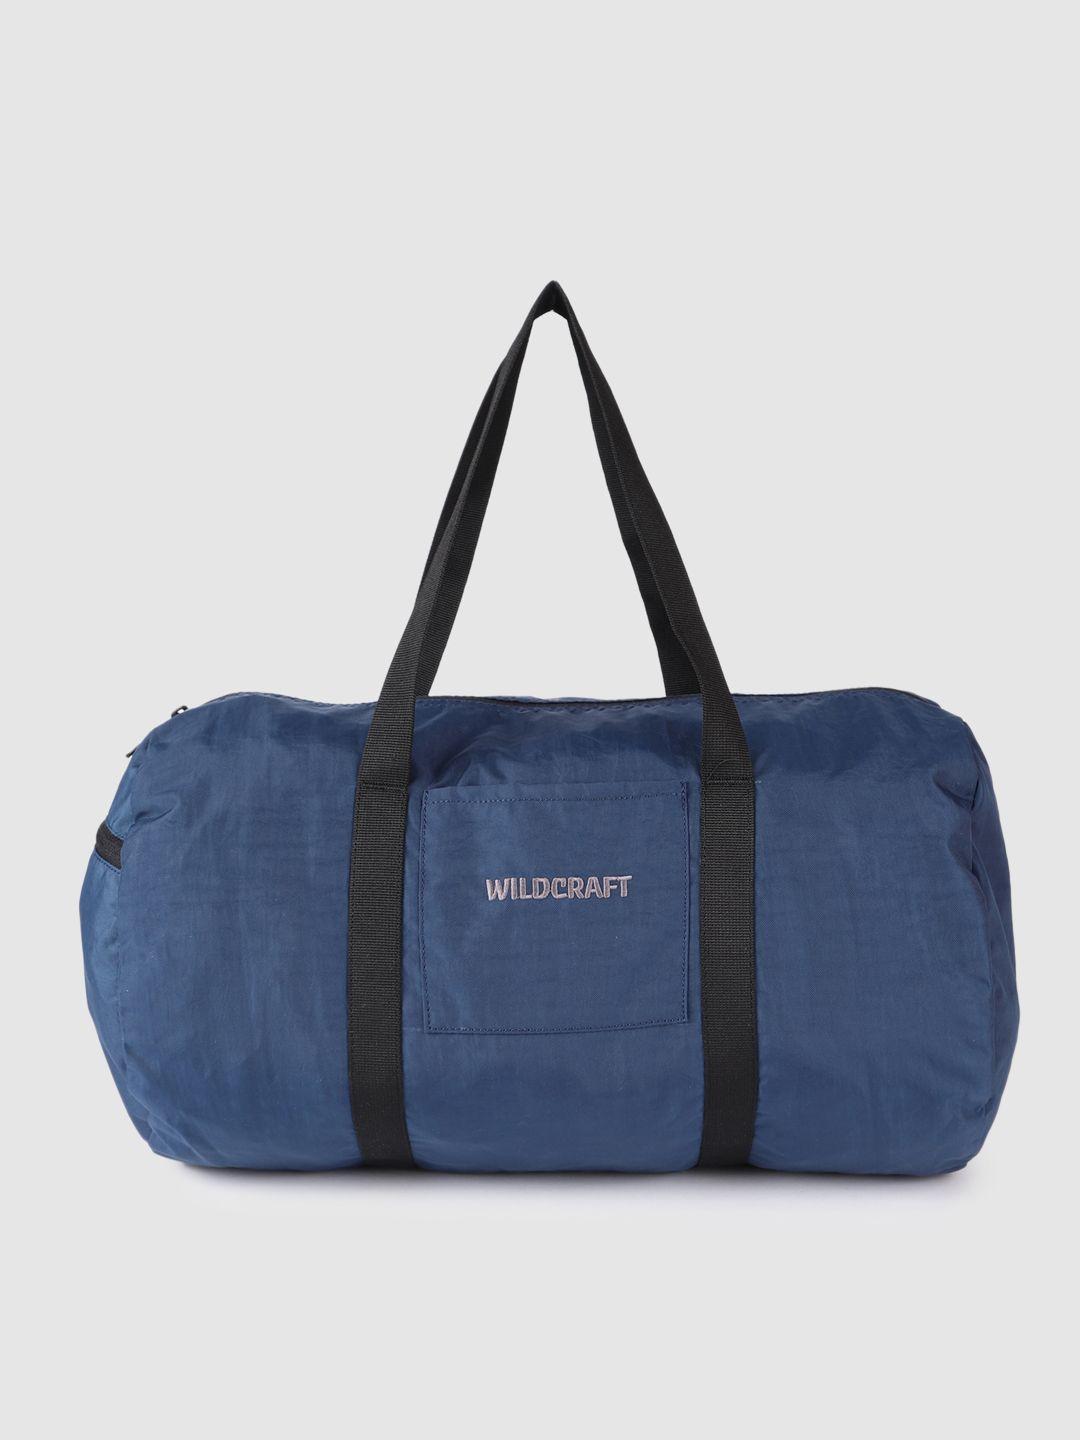 wildcraft unisex navy blue 1 duffle bag